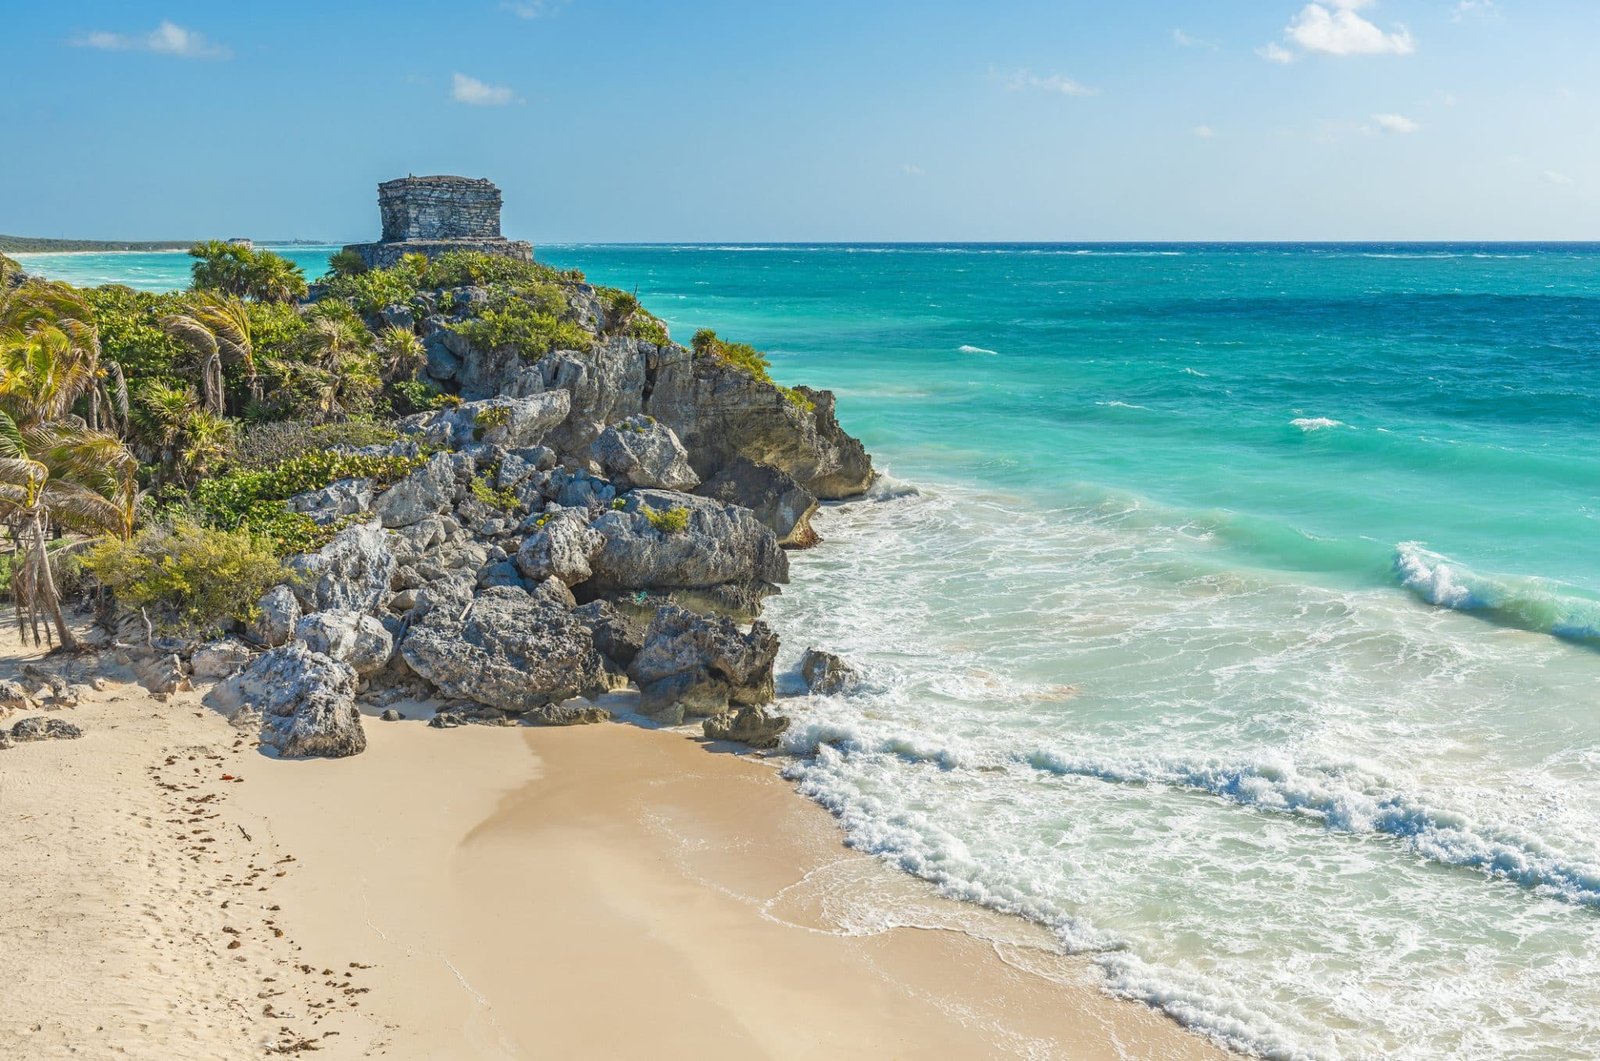 Winds temple along the Caribbean Sea, Quintana Roo State, Yucatan Peninsula, Mexico.